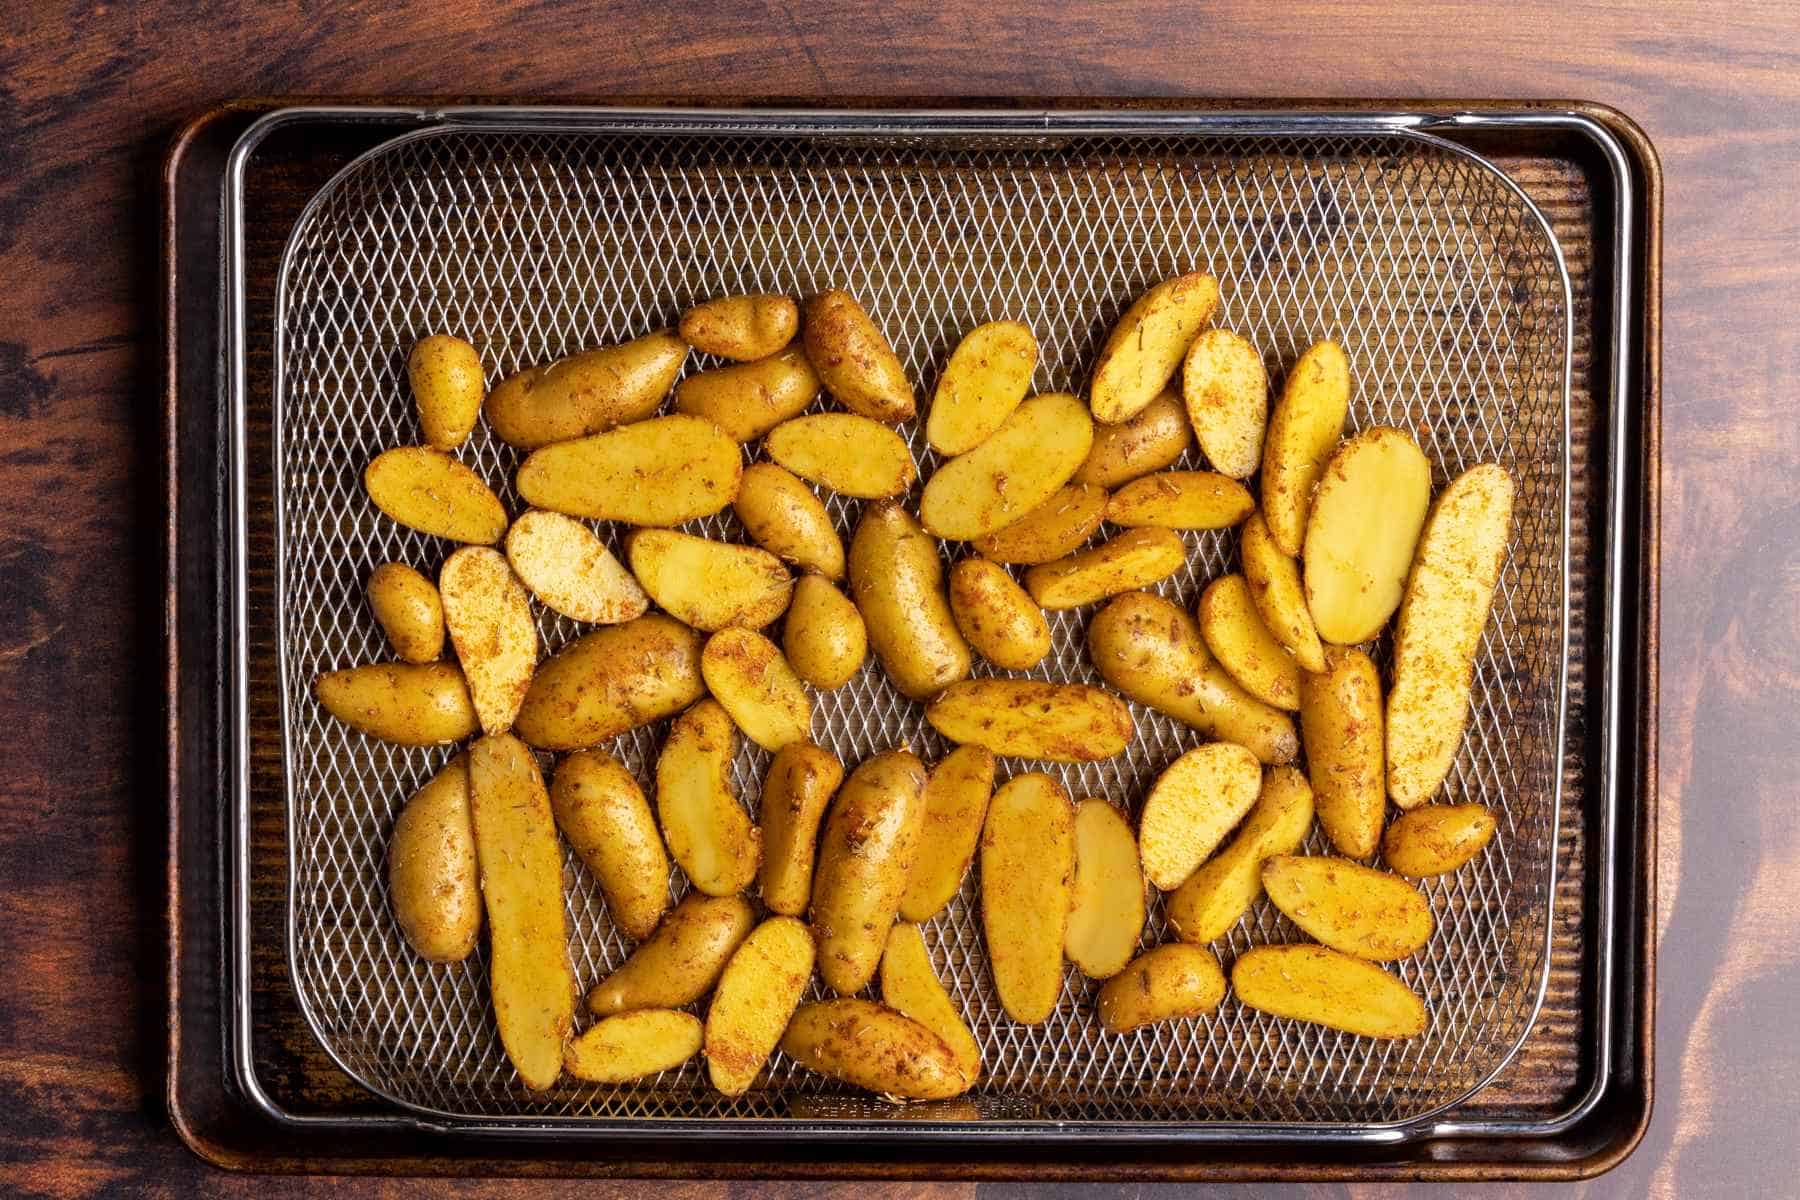 Seasoned fingerling potatoes in air fryer basket.